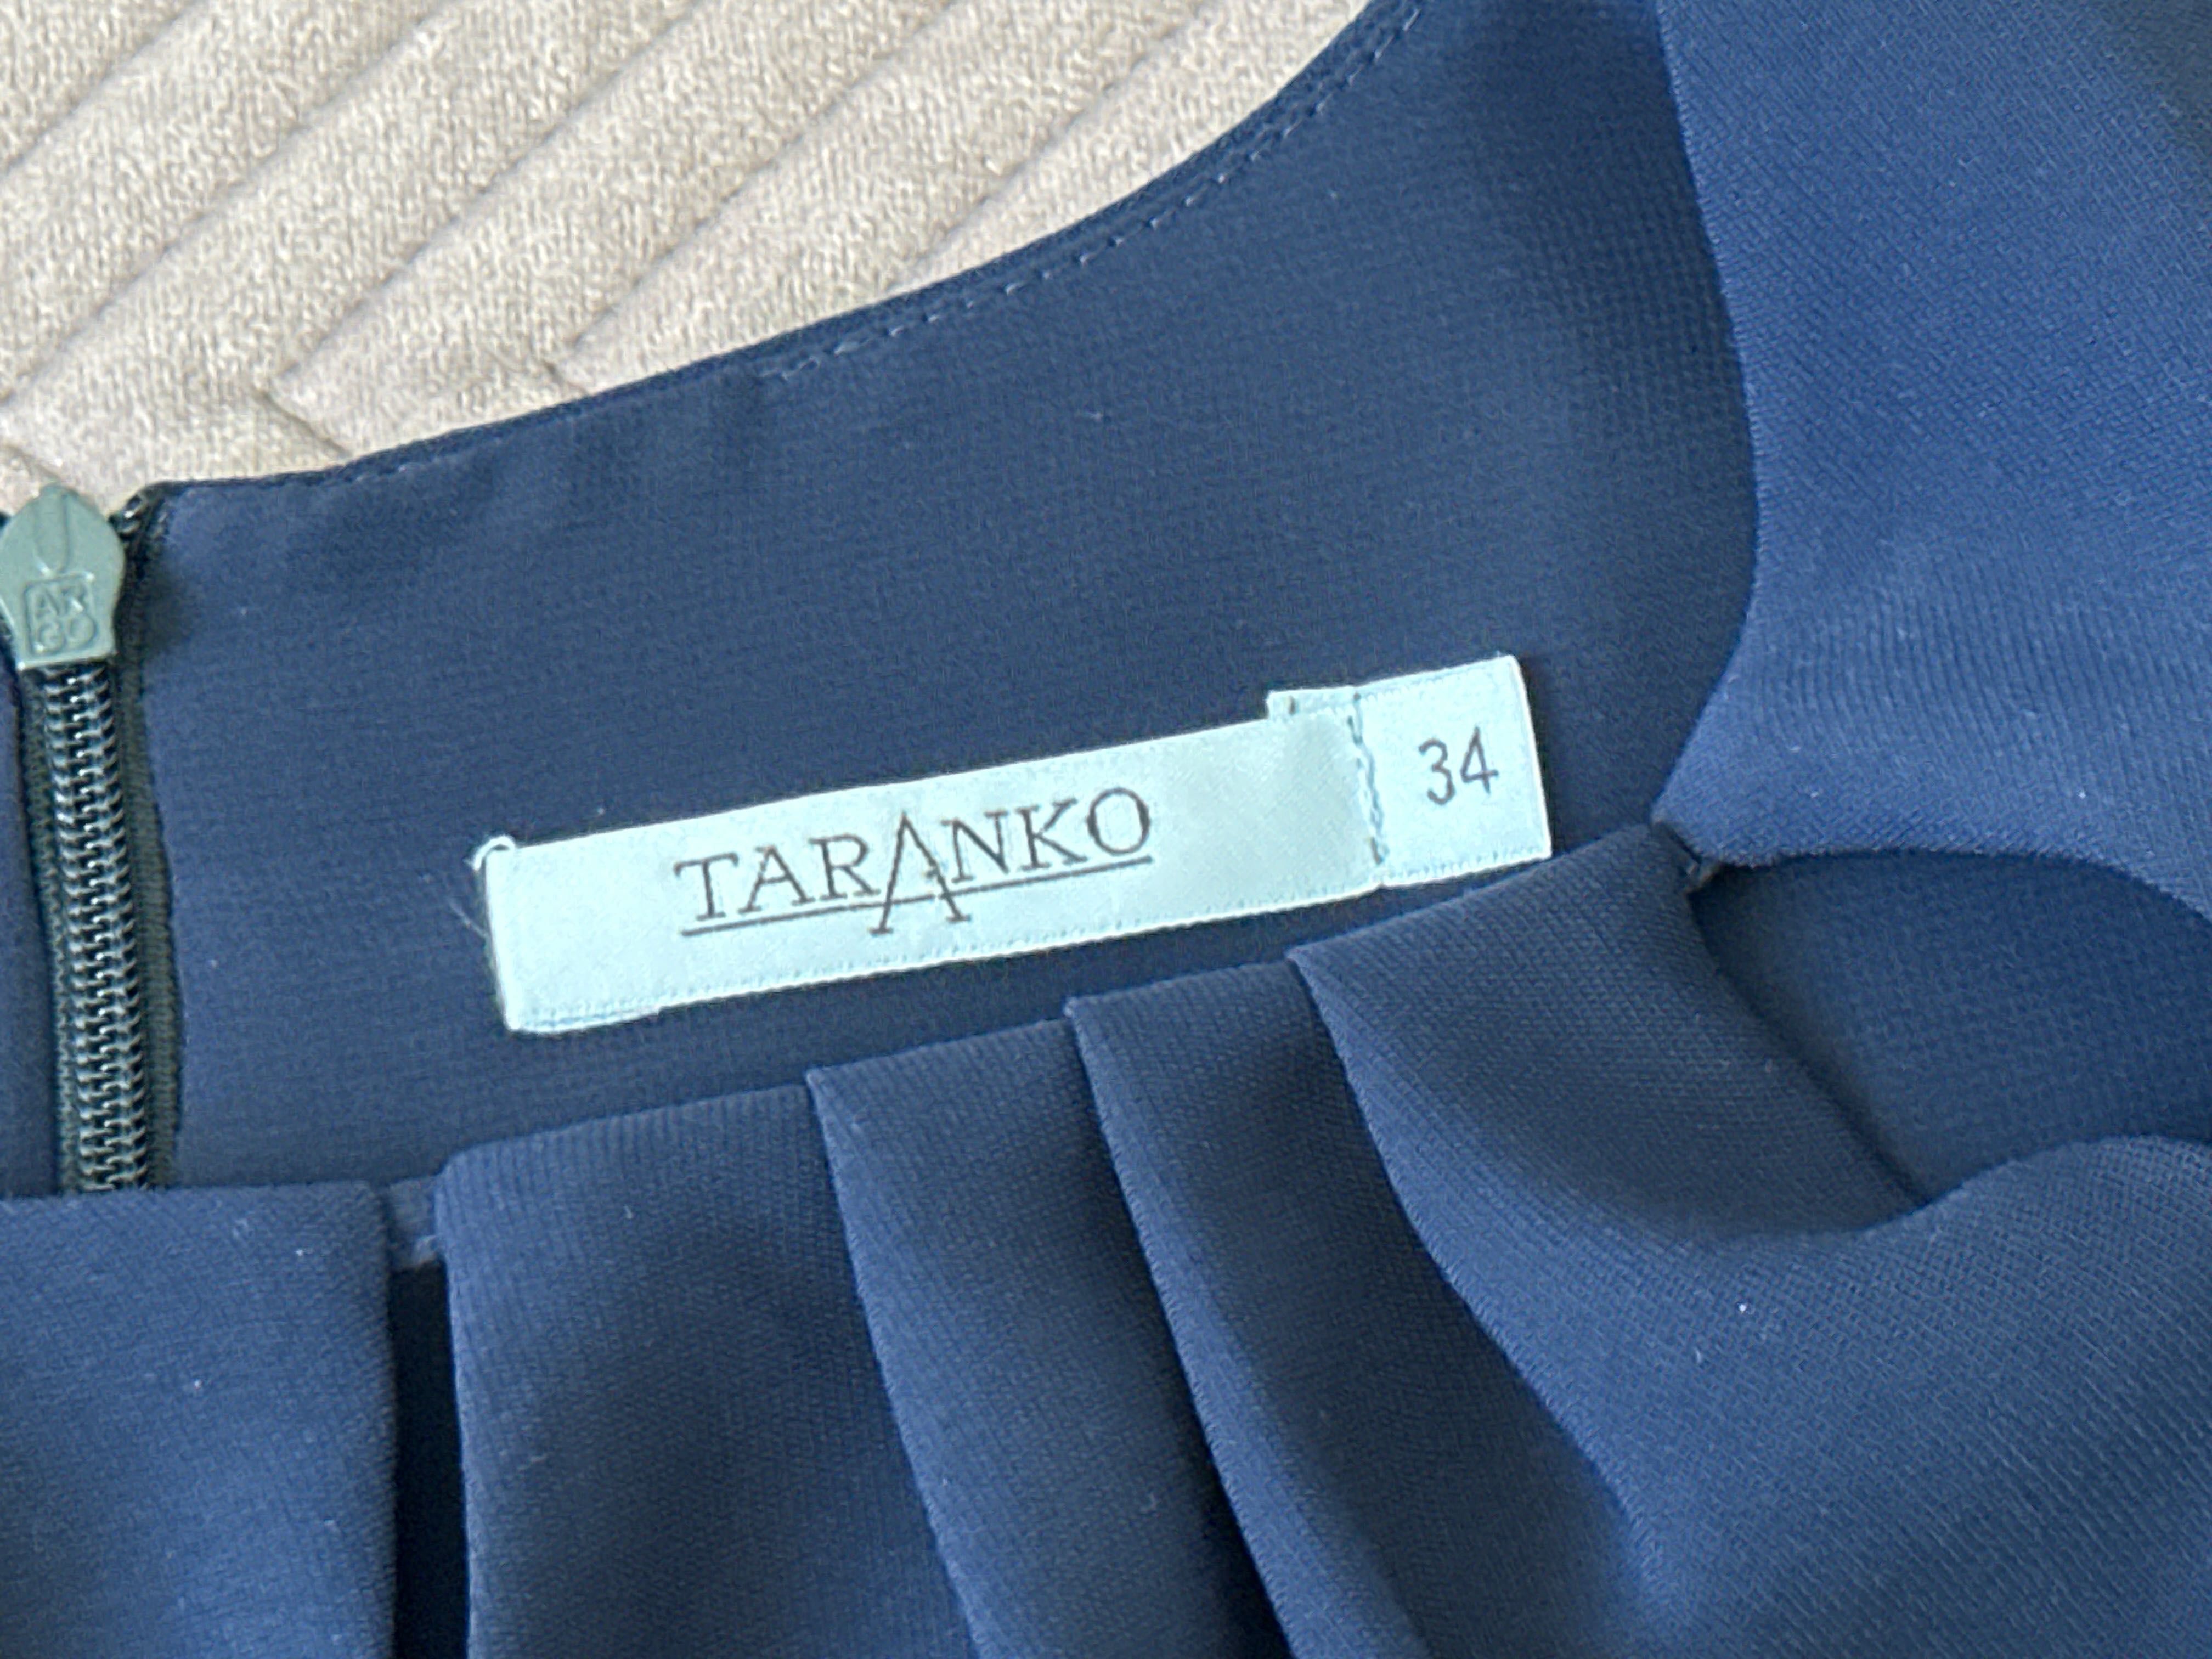 Sukienka damska elegancka, Taranko, rozmiar 34.